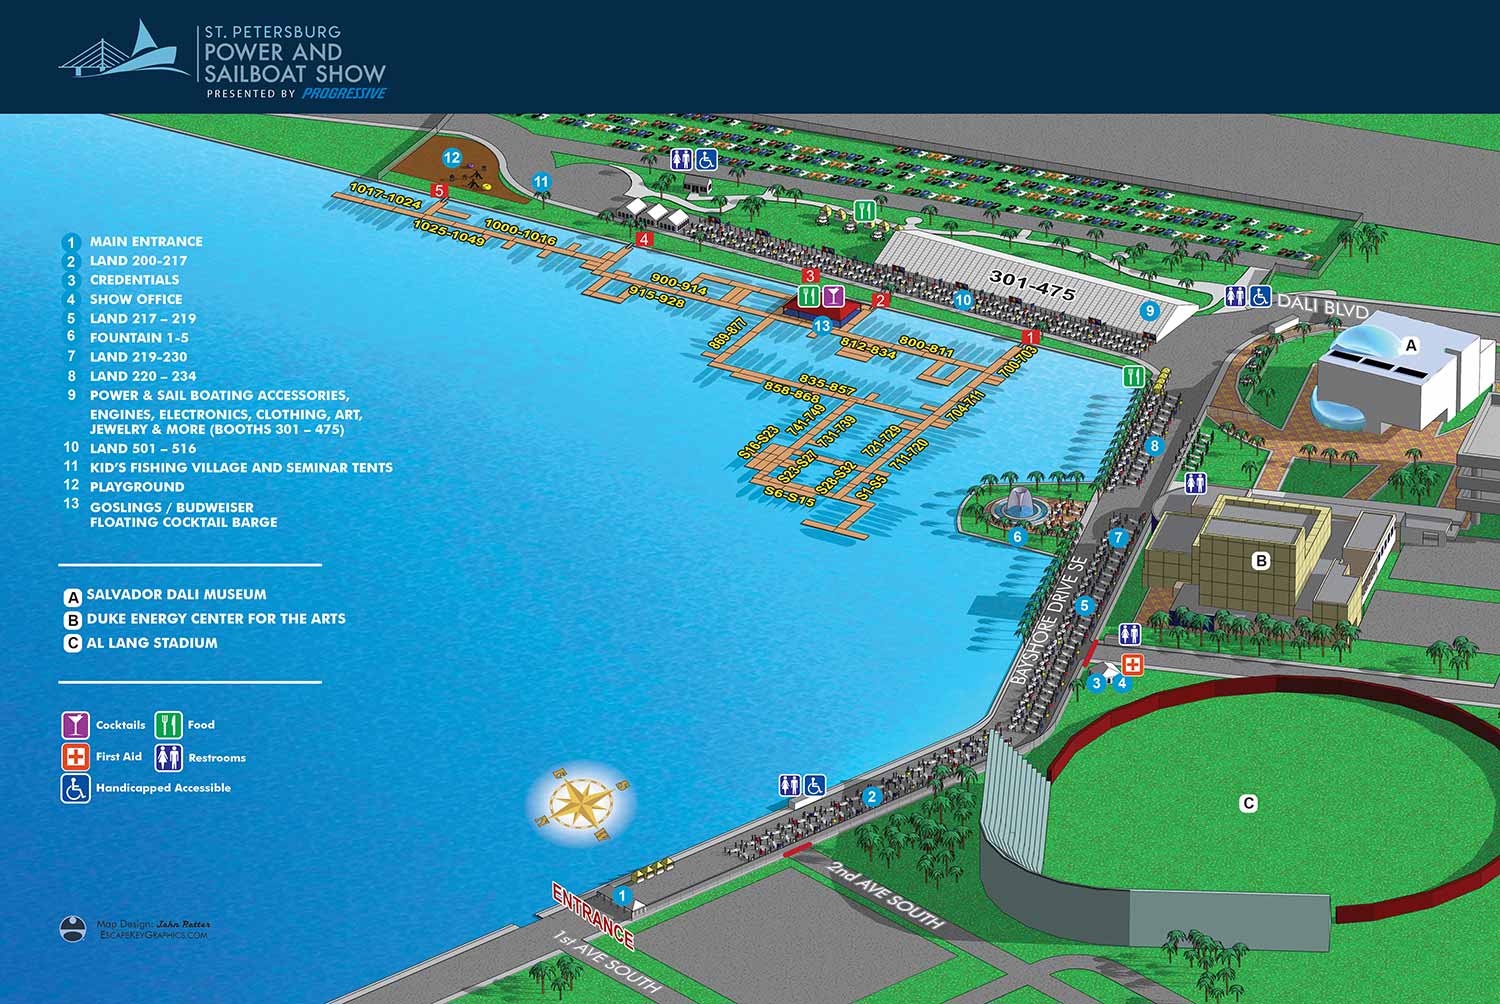 Saint Petersburg Power and Sailboat Show Map 2022